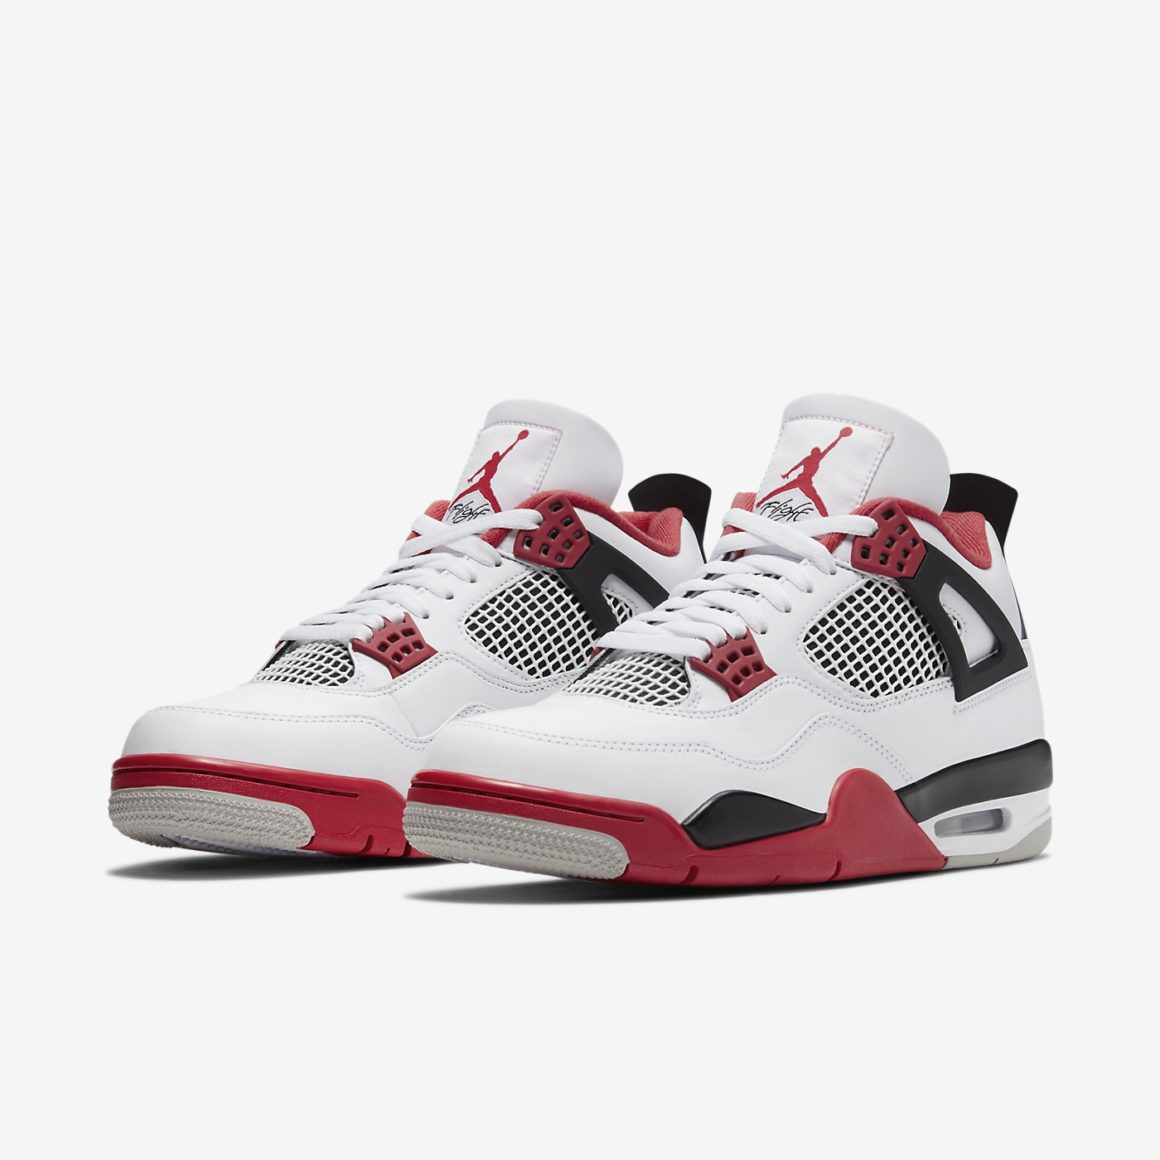 Air Jordan 4 Fire Red 2020 - Sneakers.fr